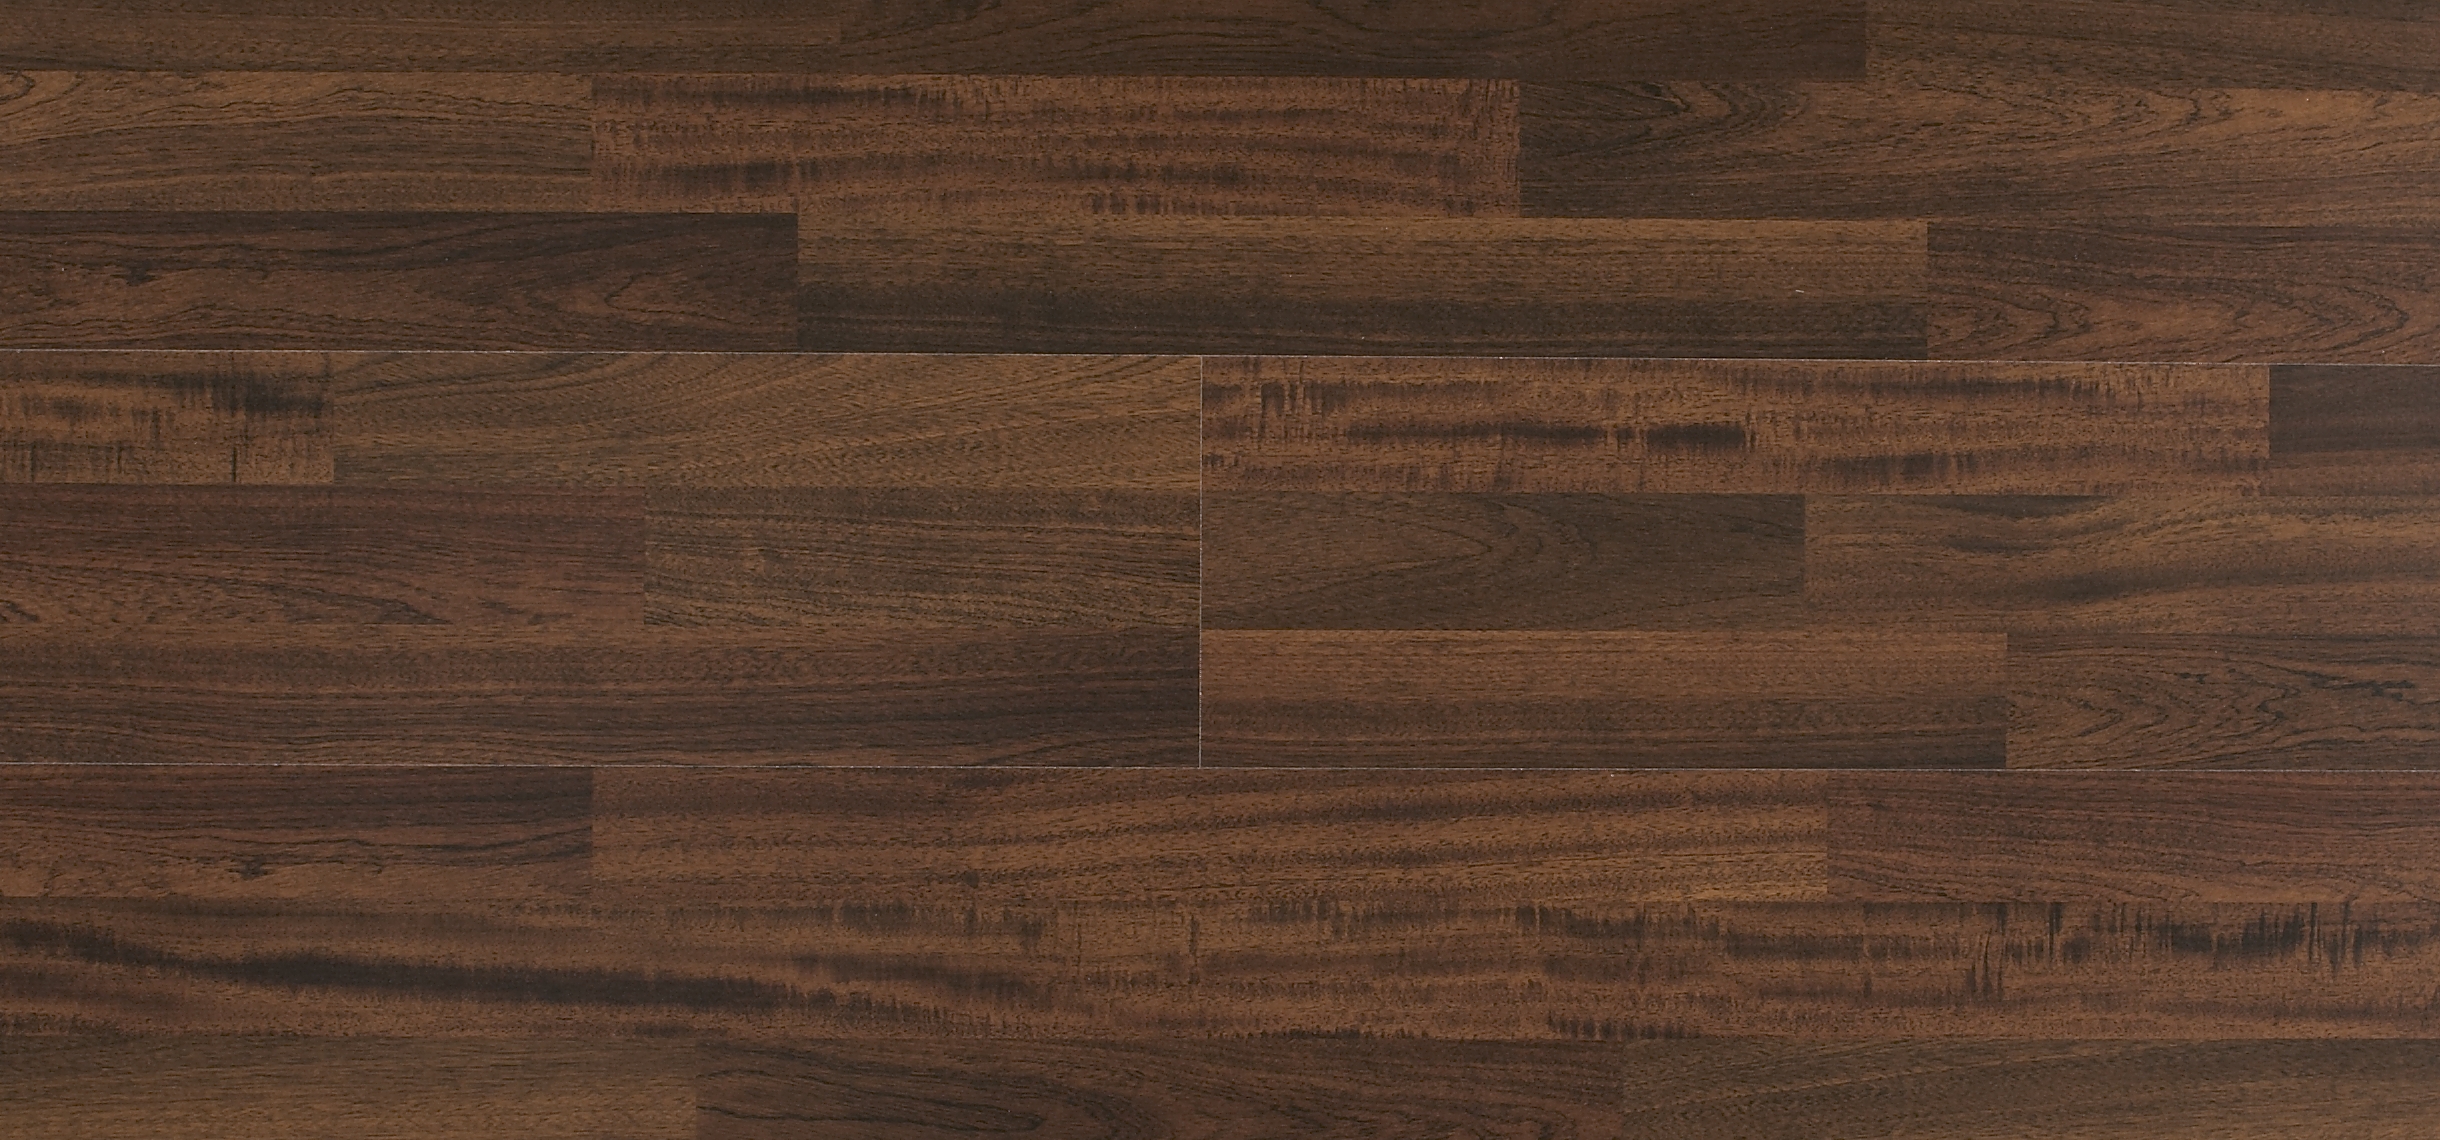 wood tiles texture, wooden texture